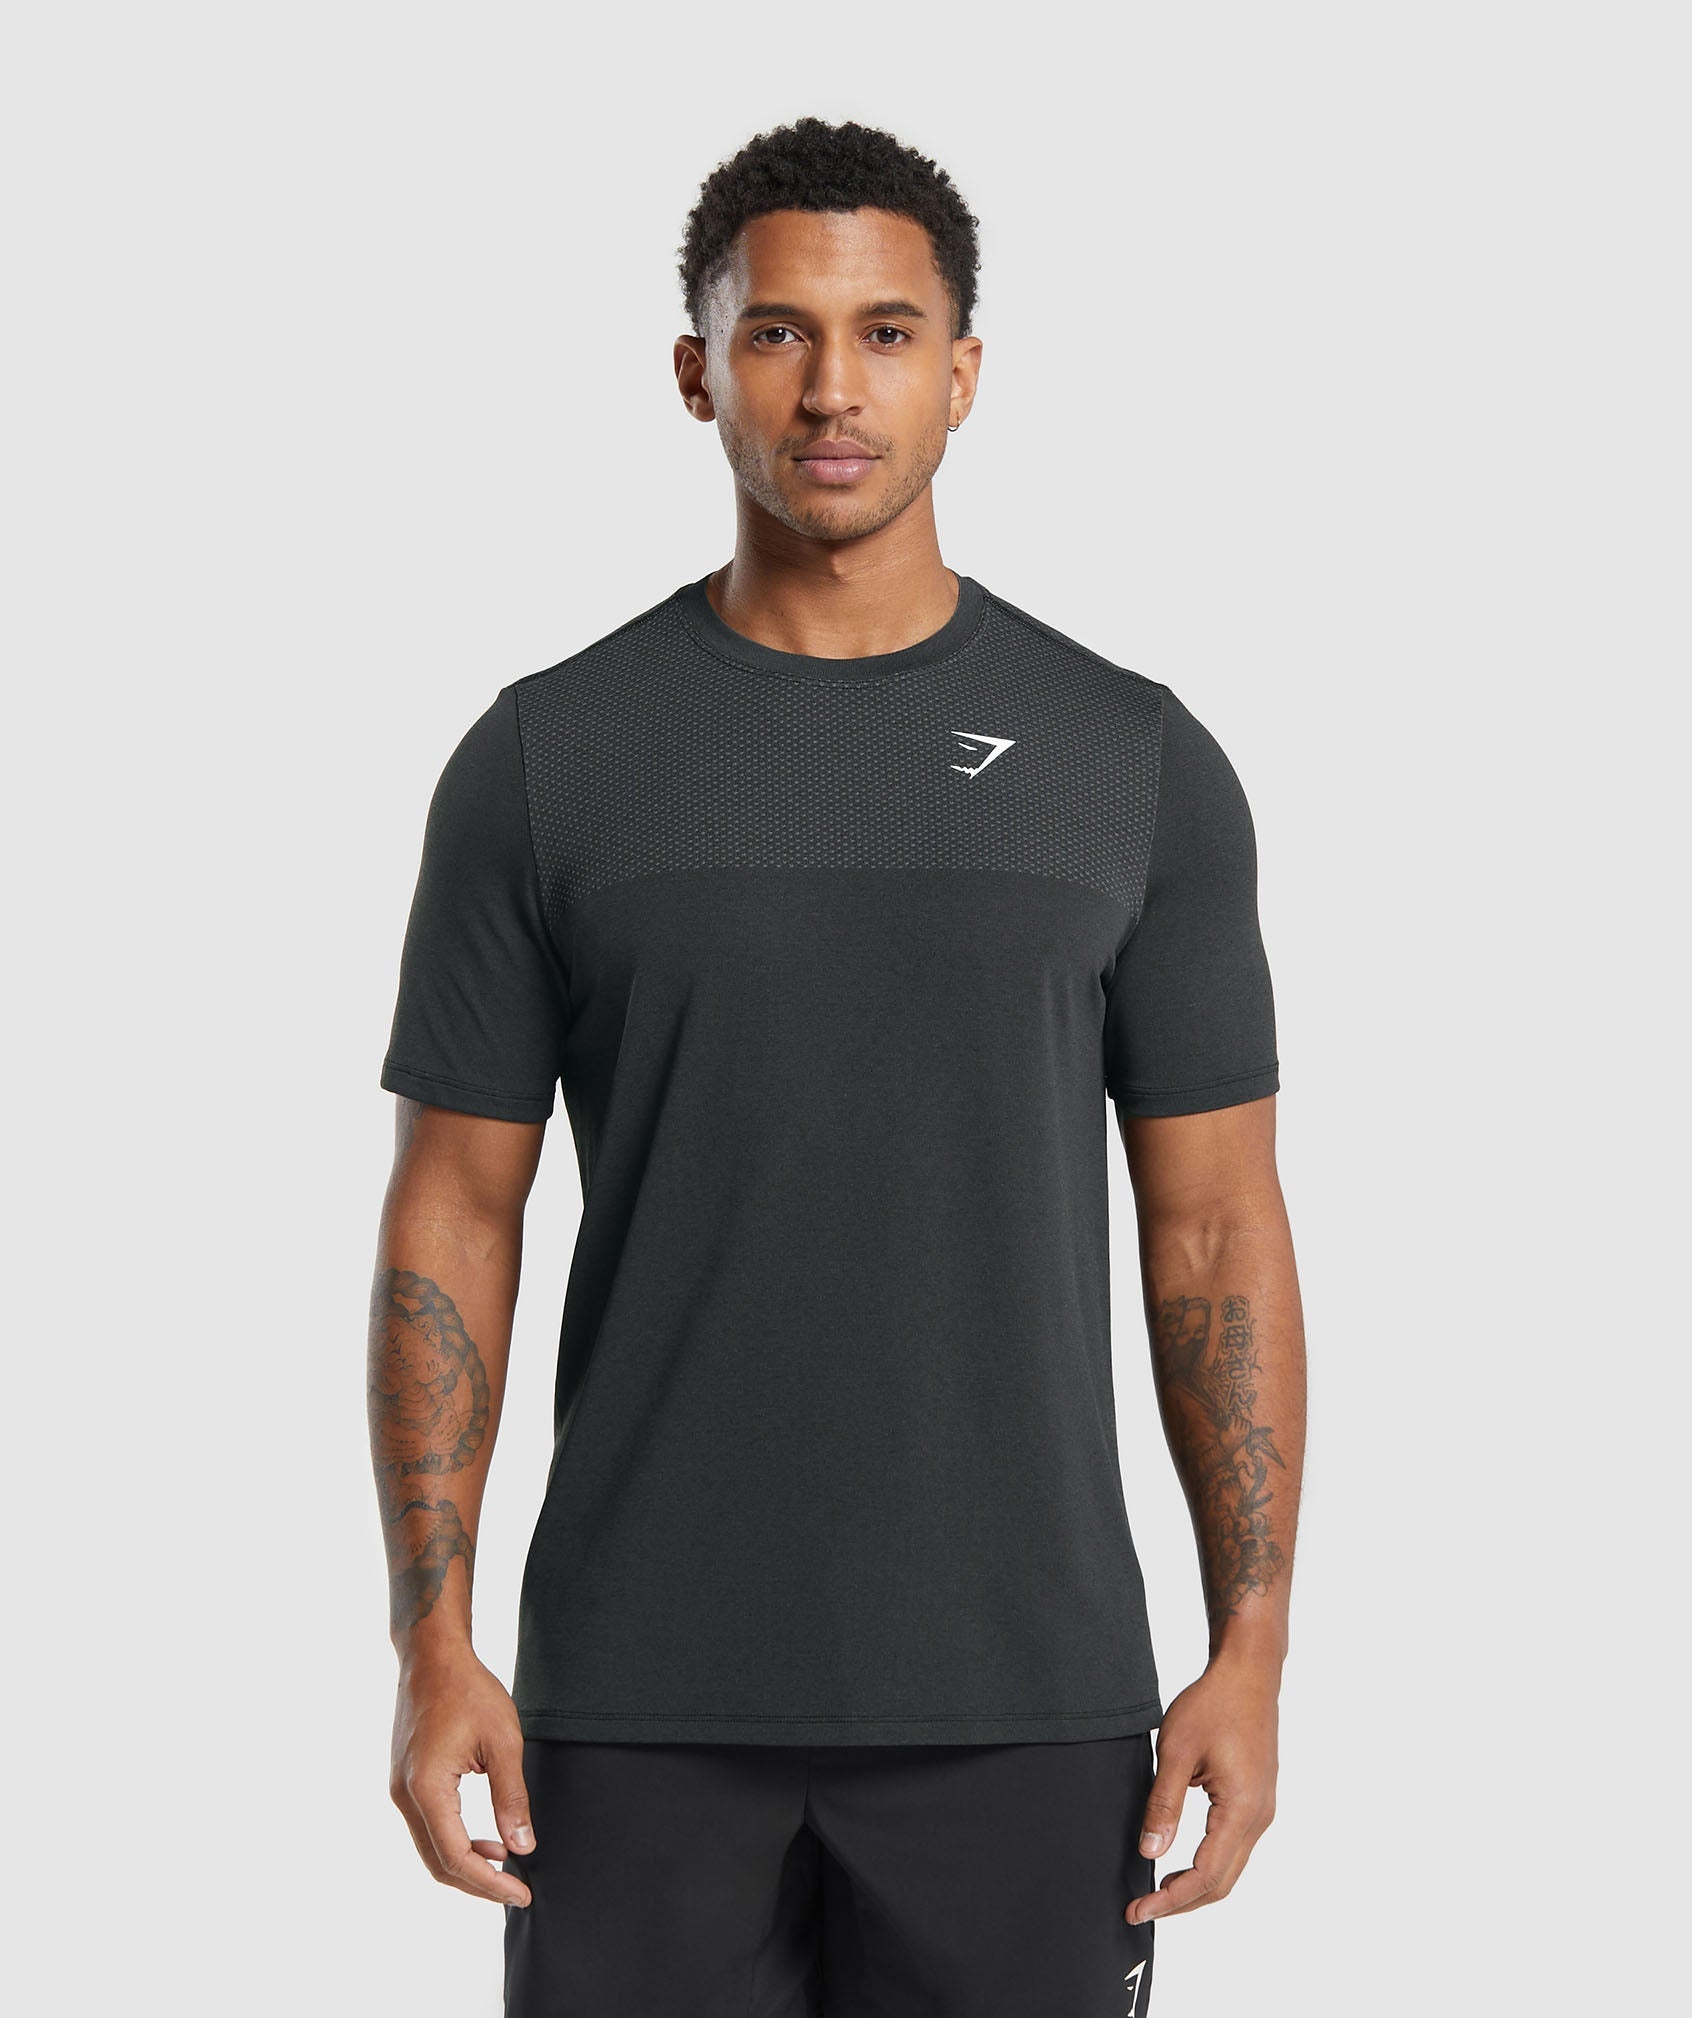 Vital Seamless T-Shirt in Black/Medium Grey Marl